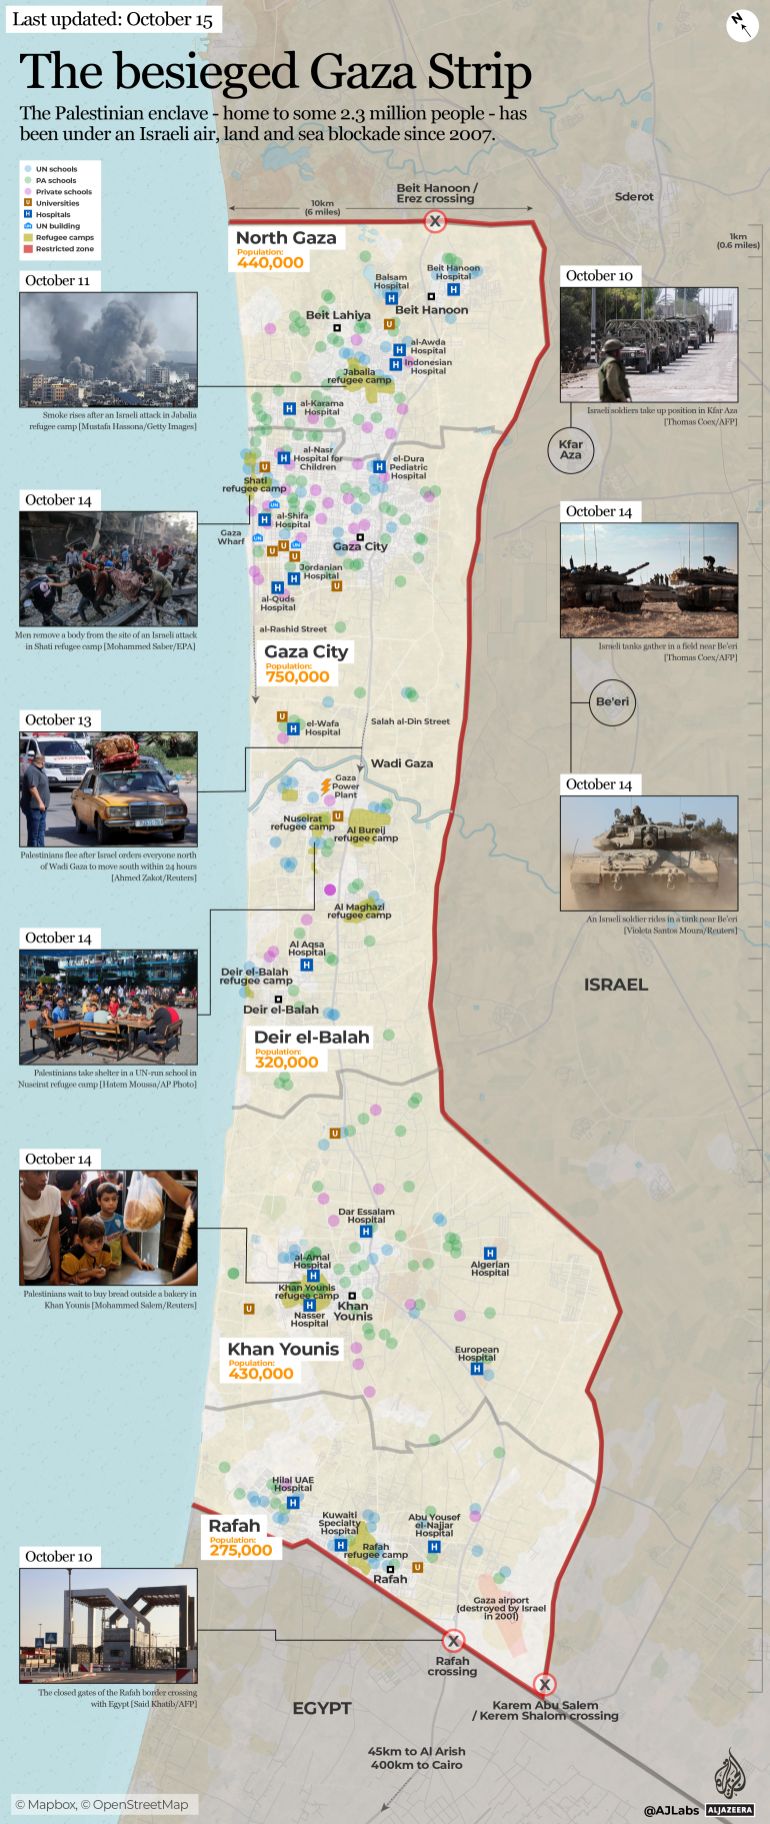 INTERACTIVE - Gaza besieged summary events October 15-80-1697381561